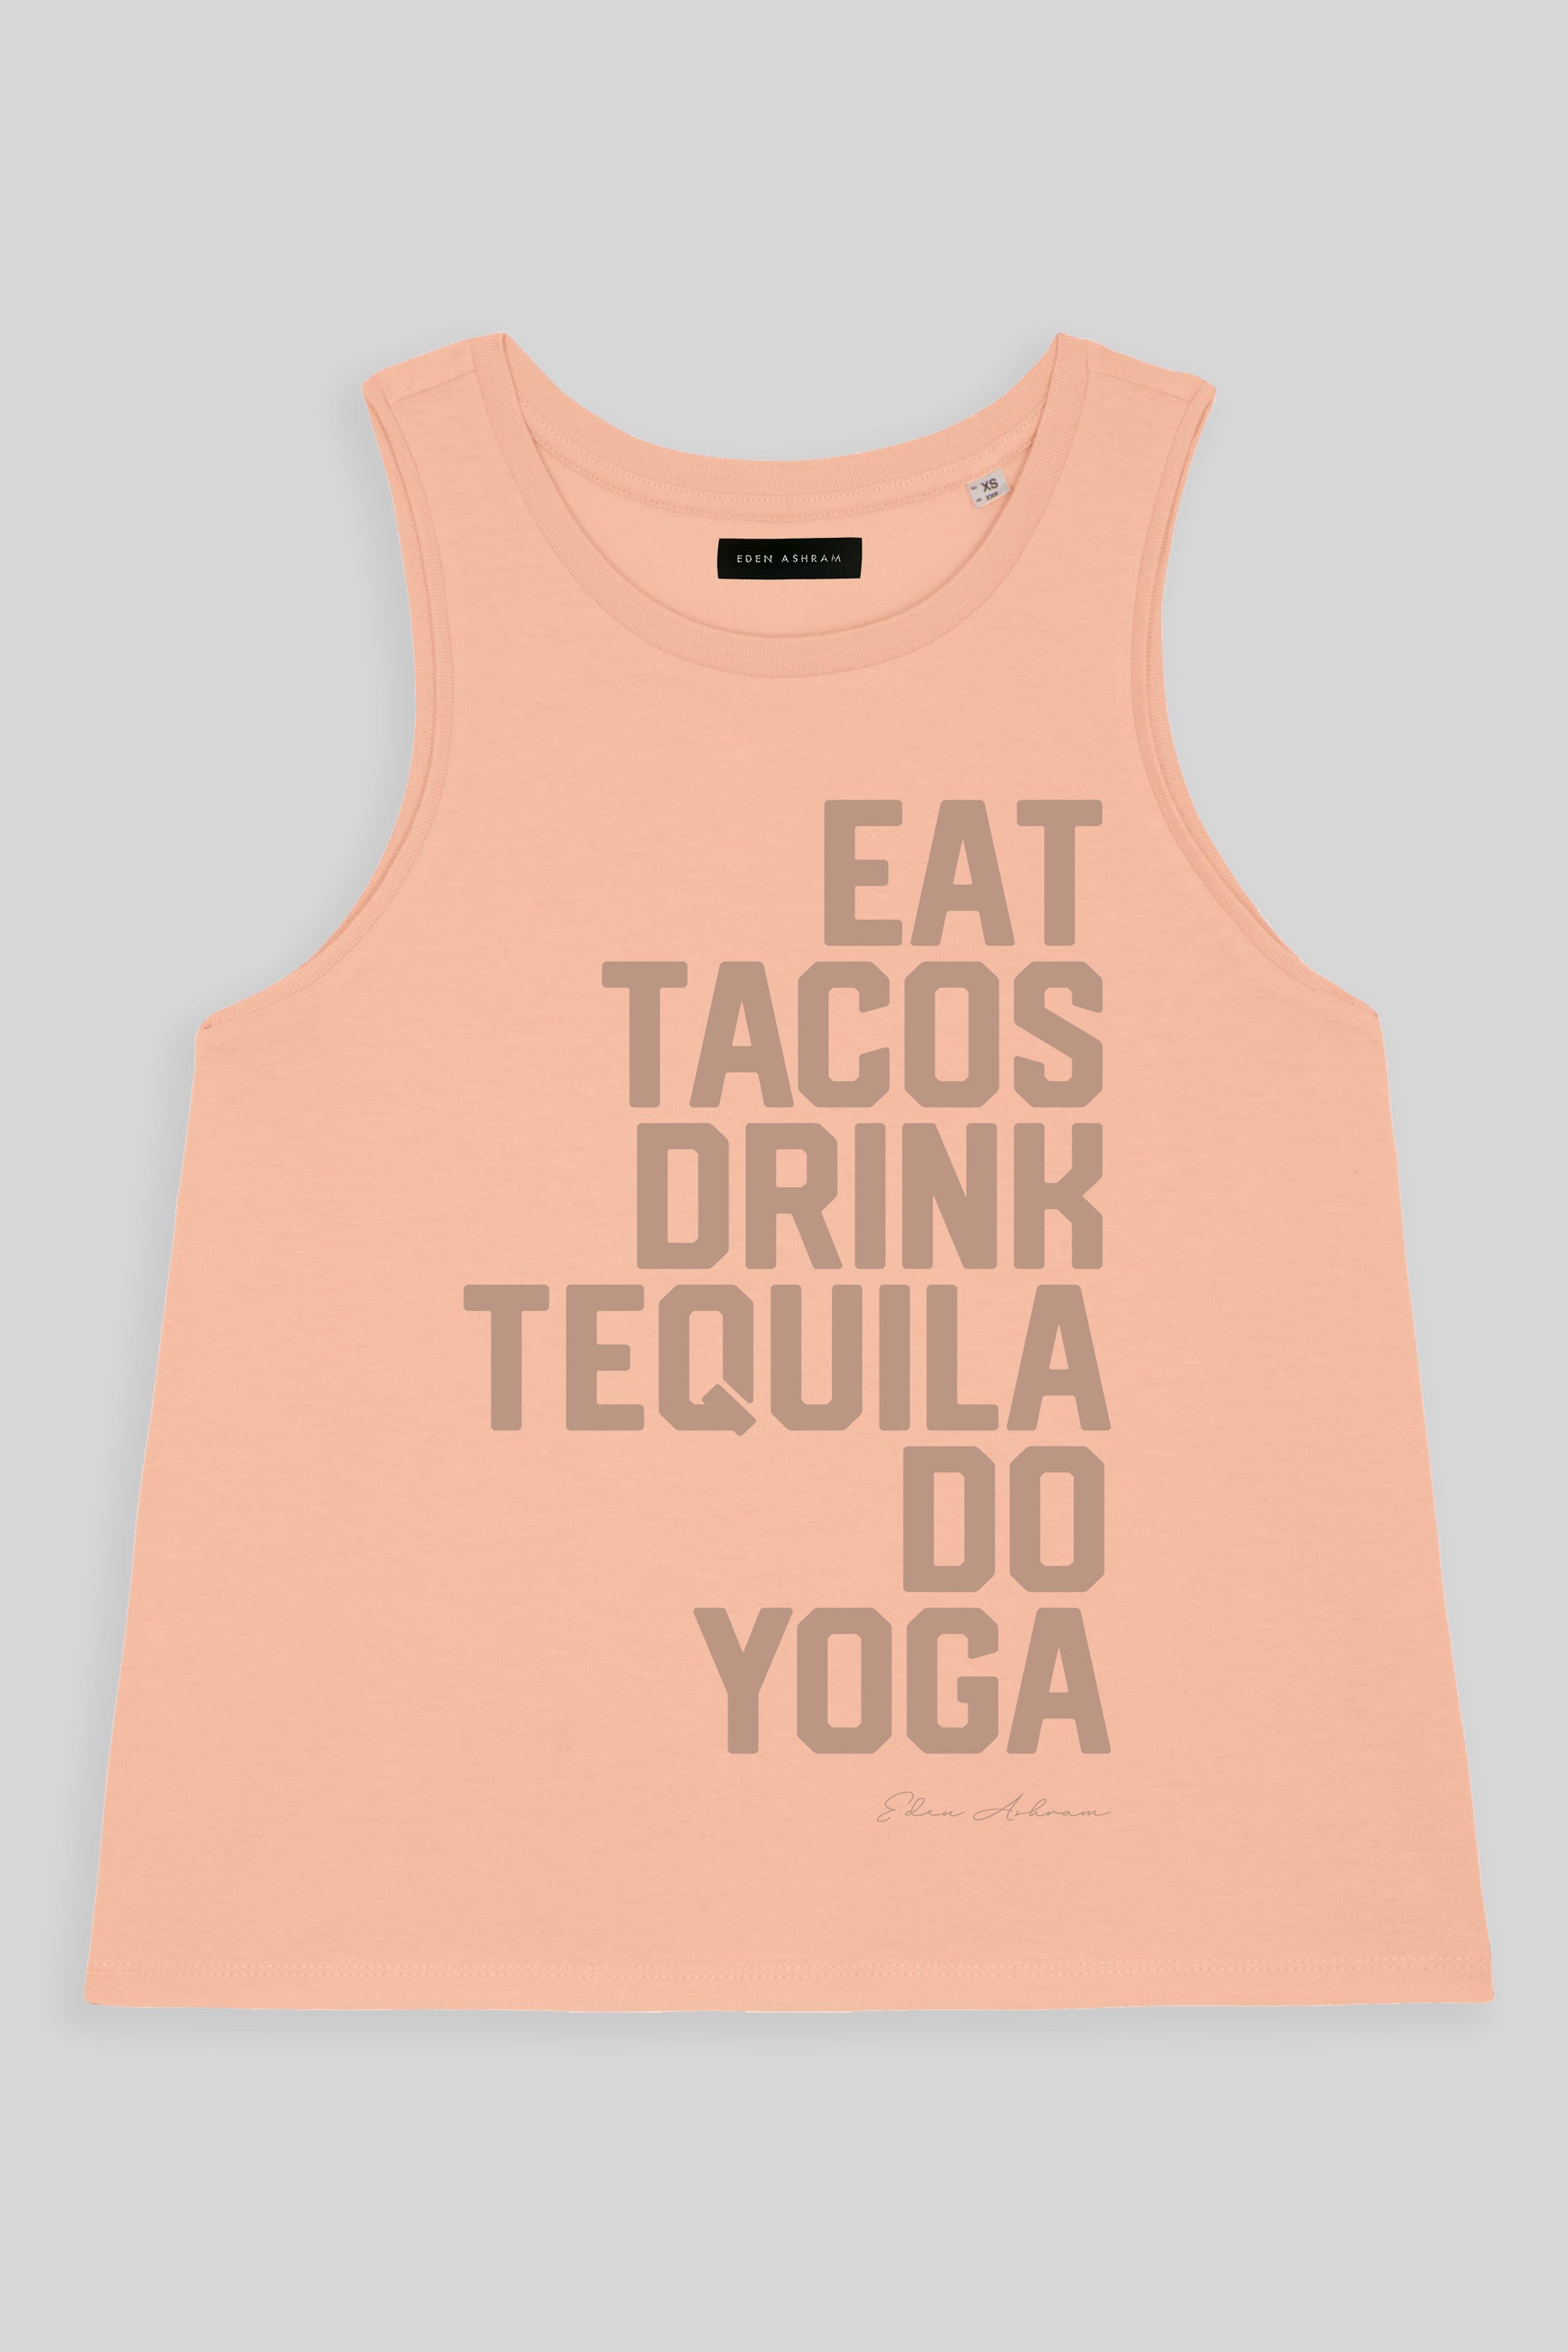 EDEN ASHRAM Eat Tacos, Drink Tequila, Do Yoga Premium Organic Crop Tank Coral